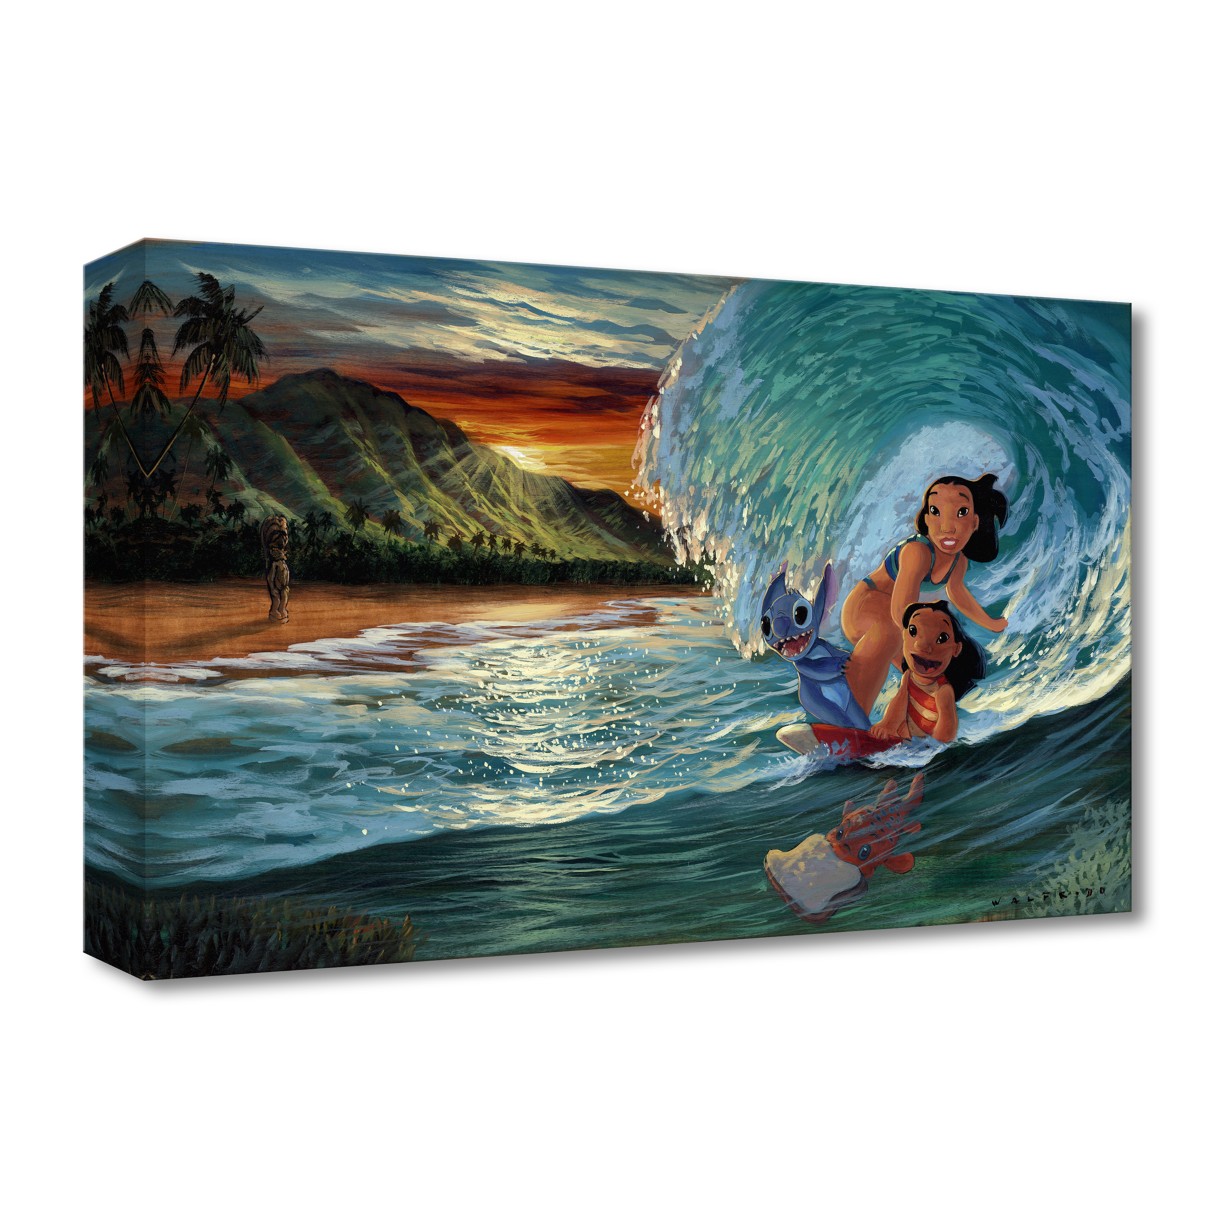 Lilo & Stitch ''Morning Surf'' Giclée on Canvas by Walfrido Garcia – Limited Edition